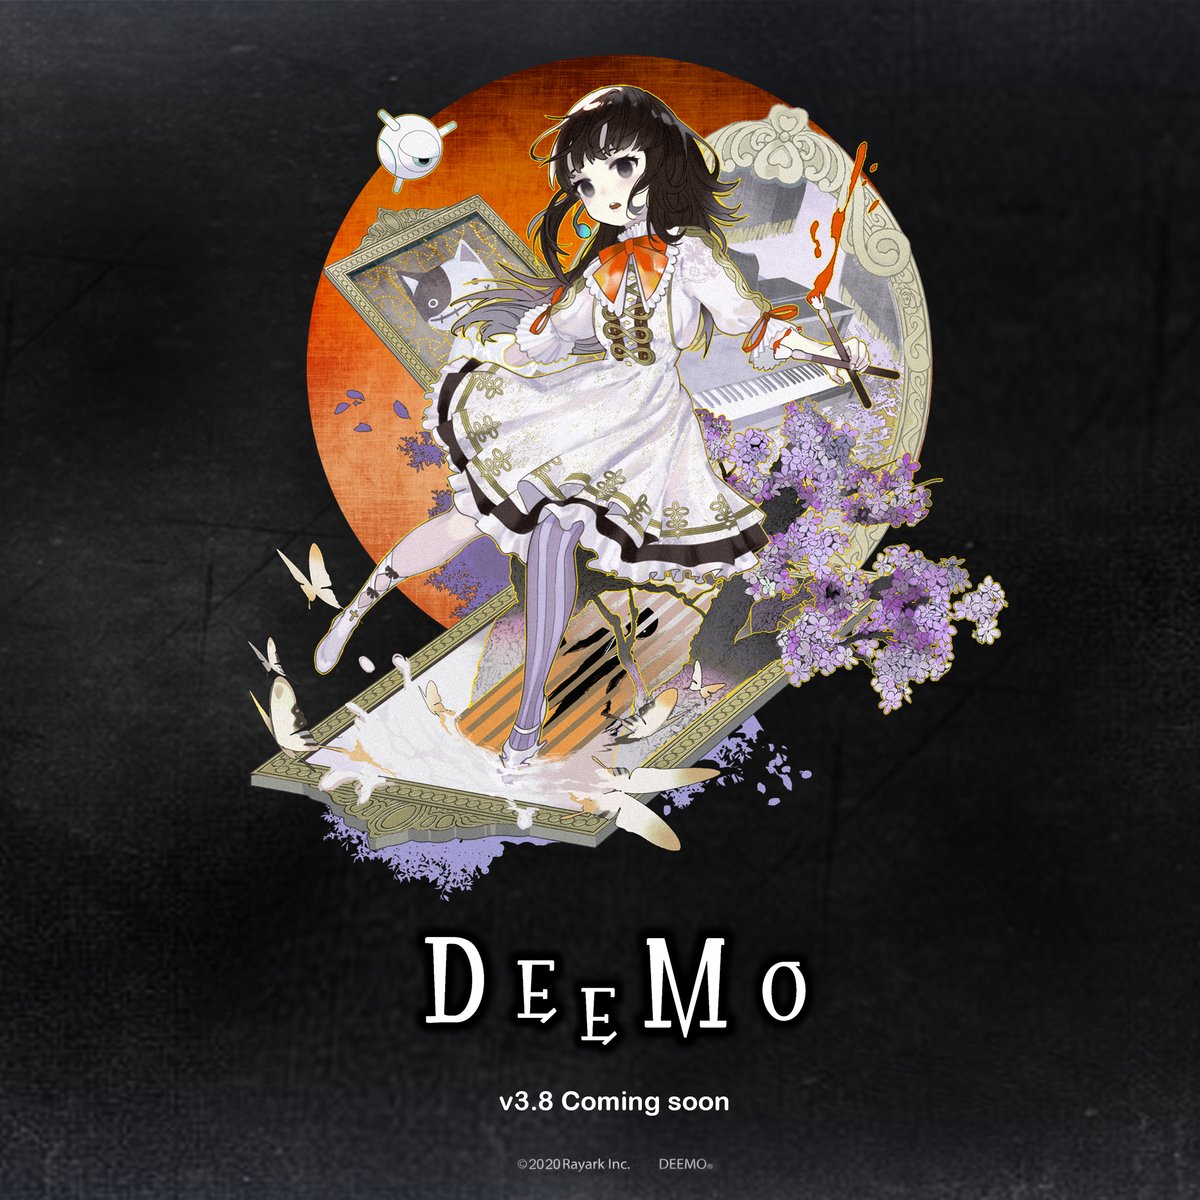 Deemo 公式 Deemo X V3 8 Coming Soon